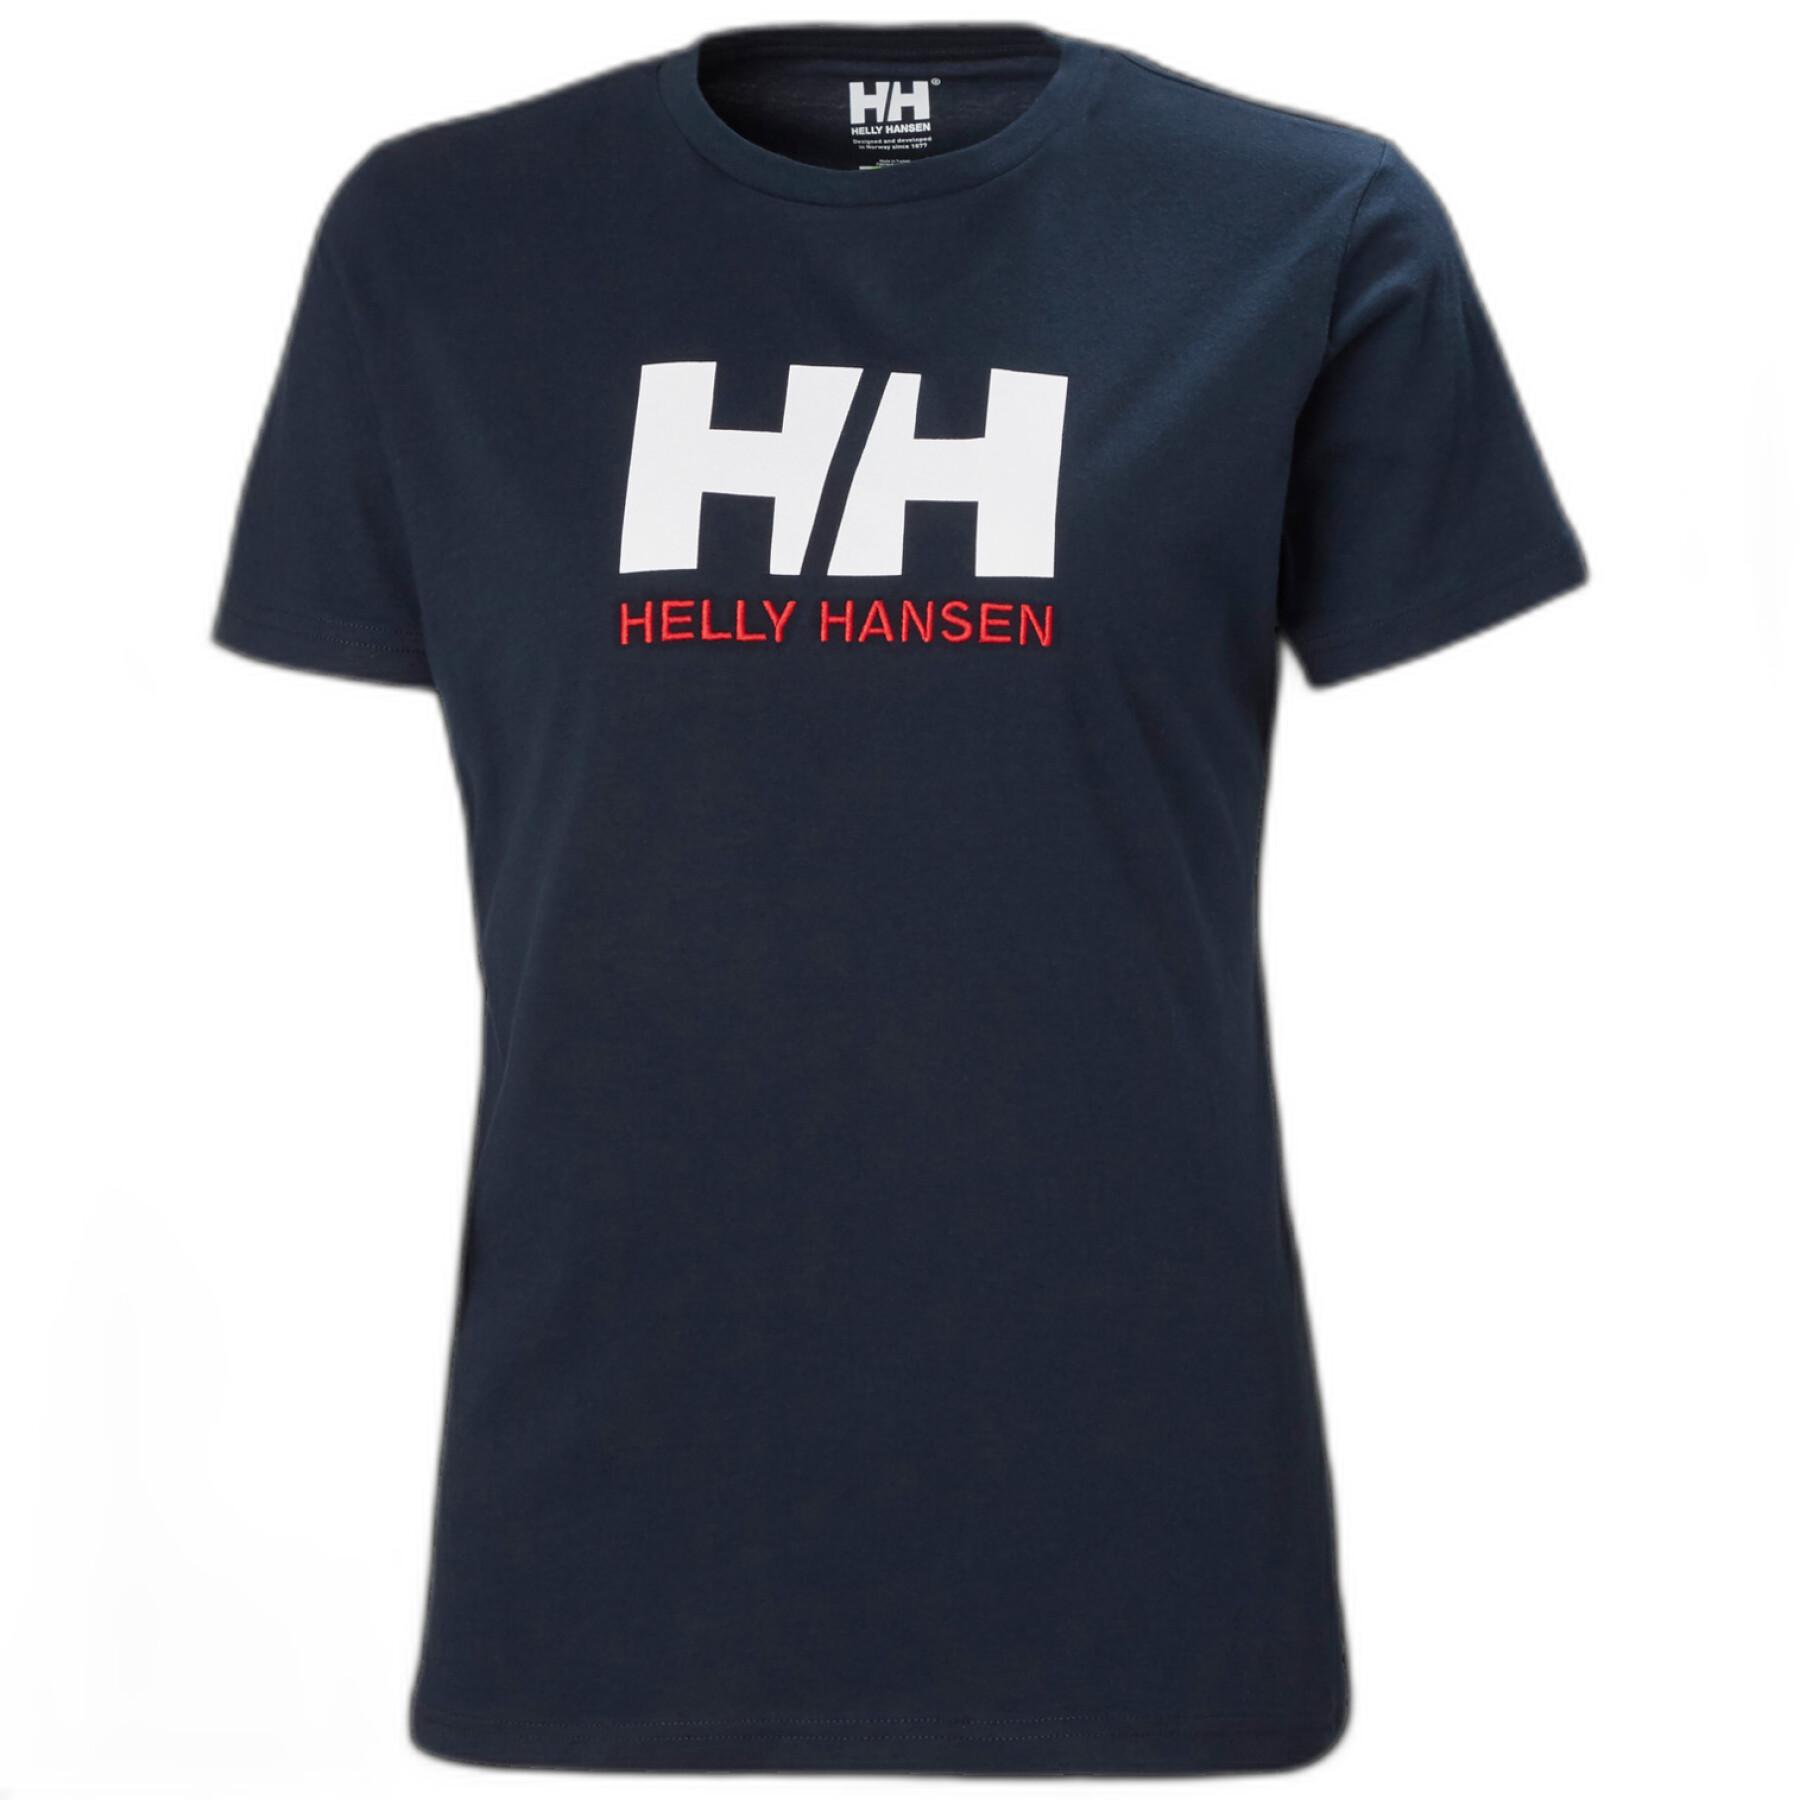 Camiseta de mujer Helly Hansen logo